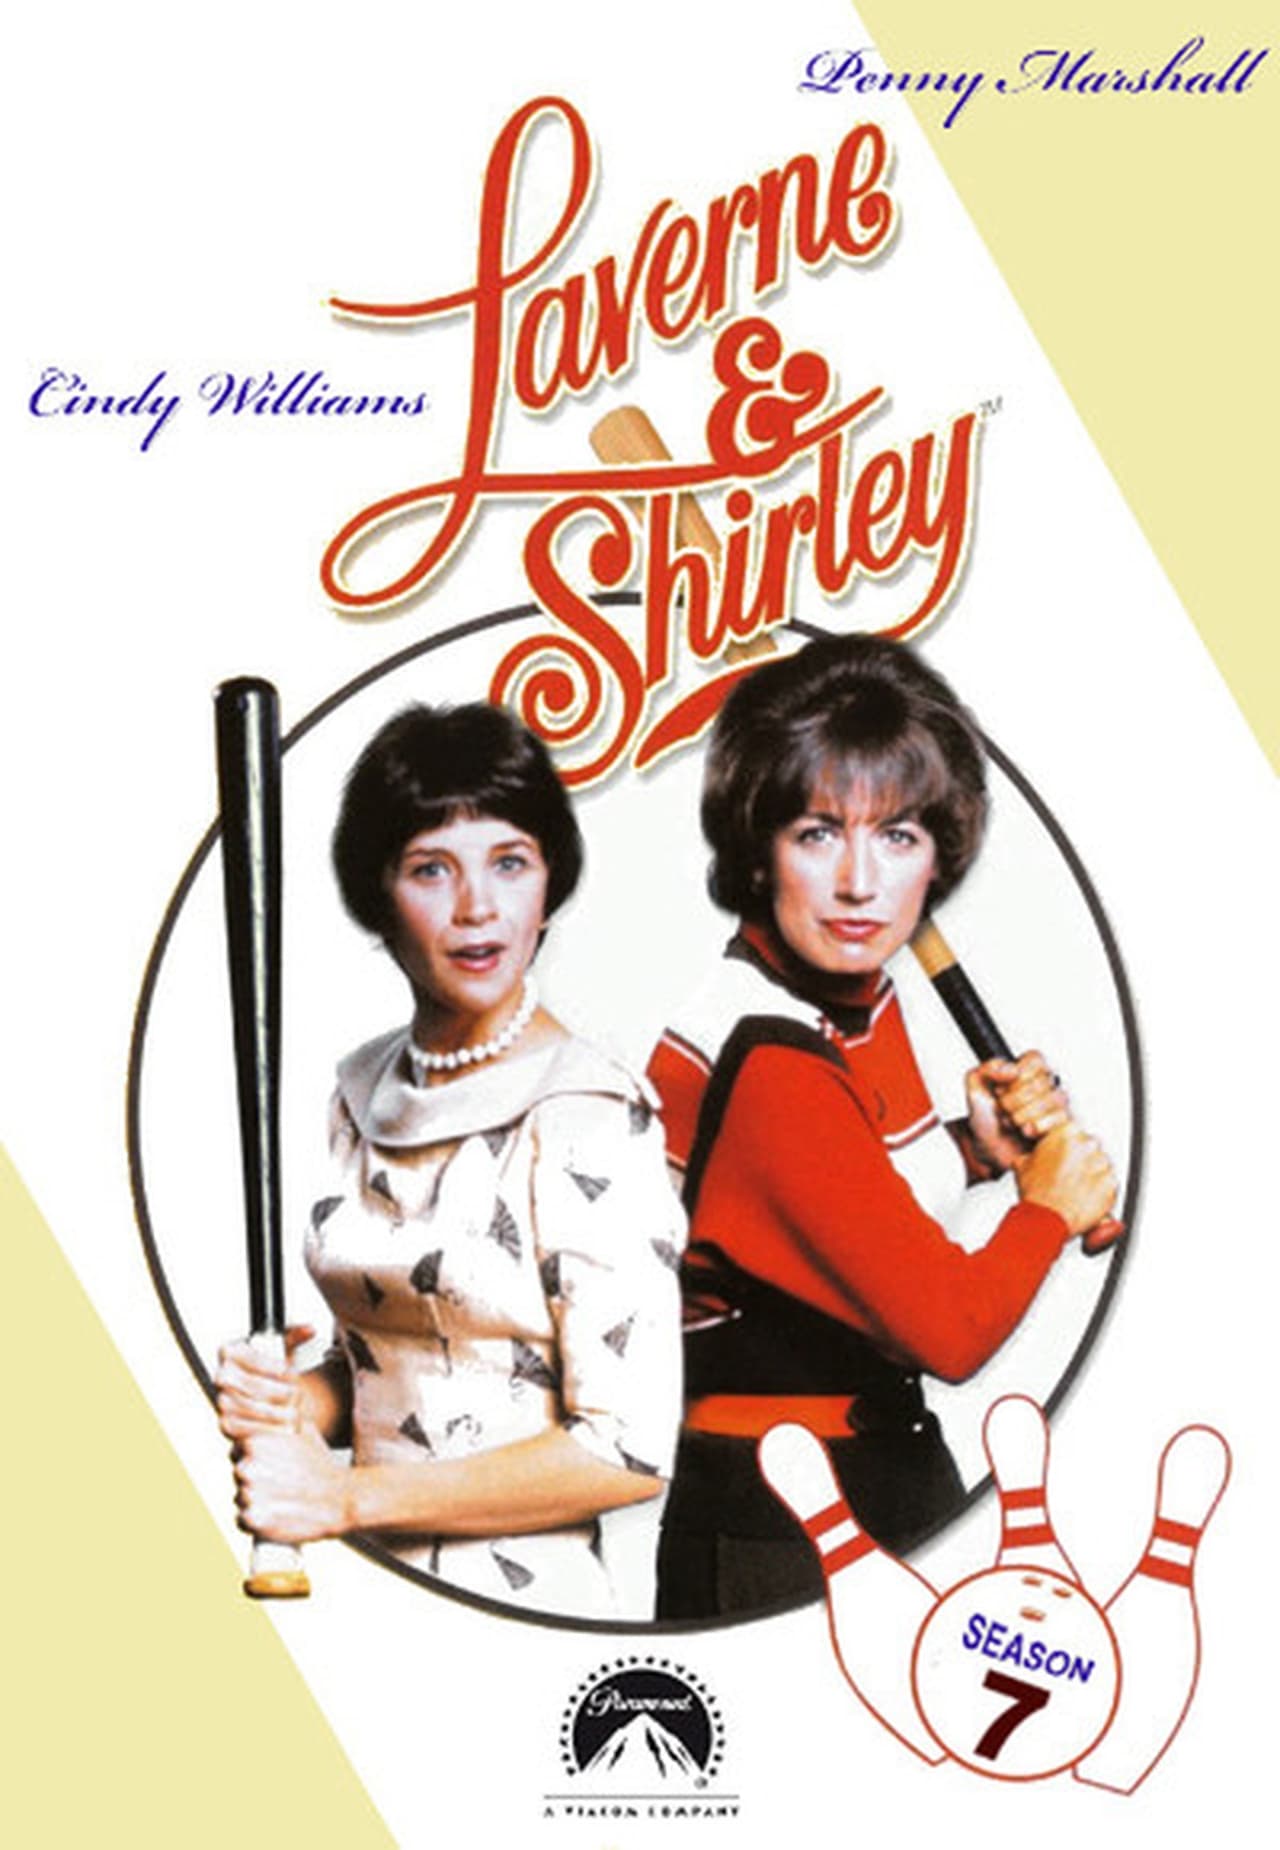 Laverne & Shirley Season 7